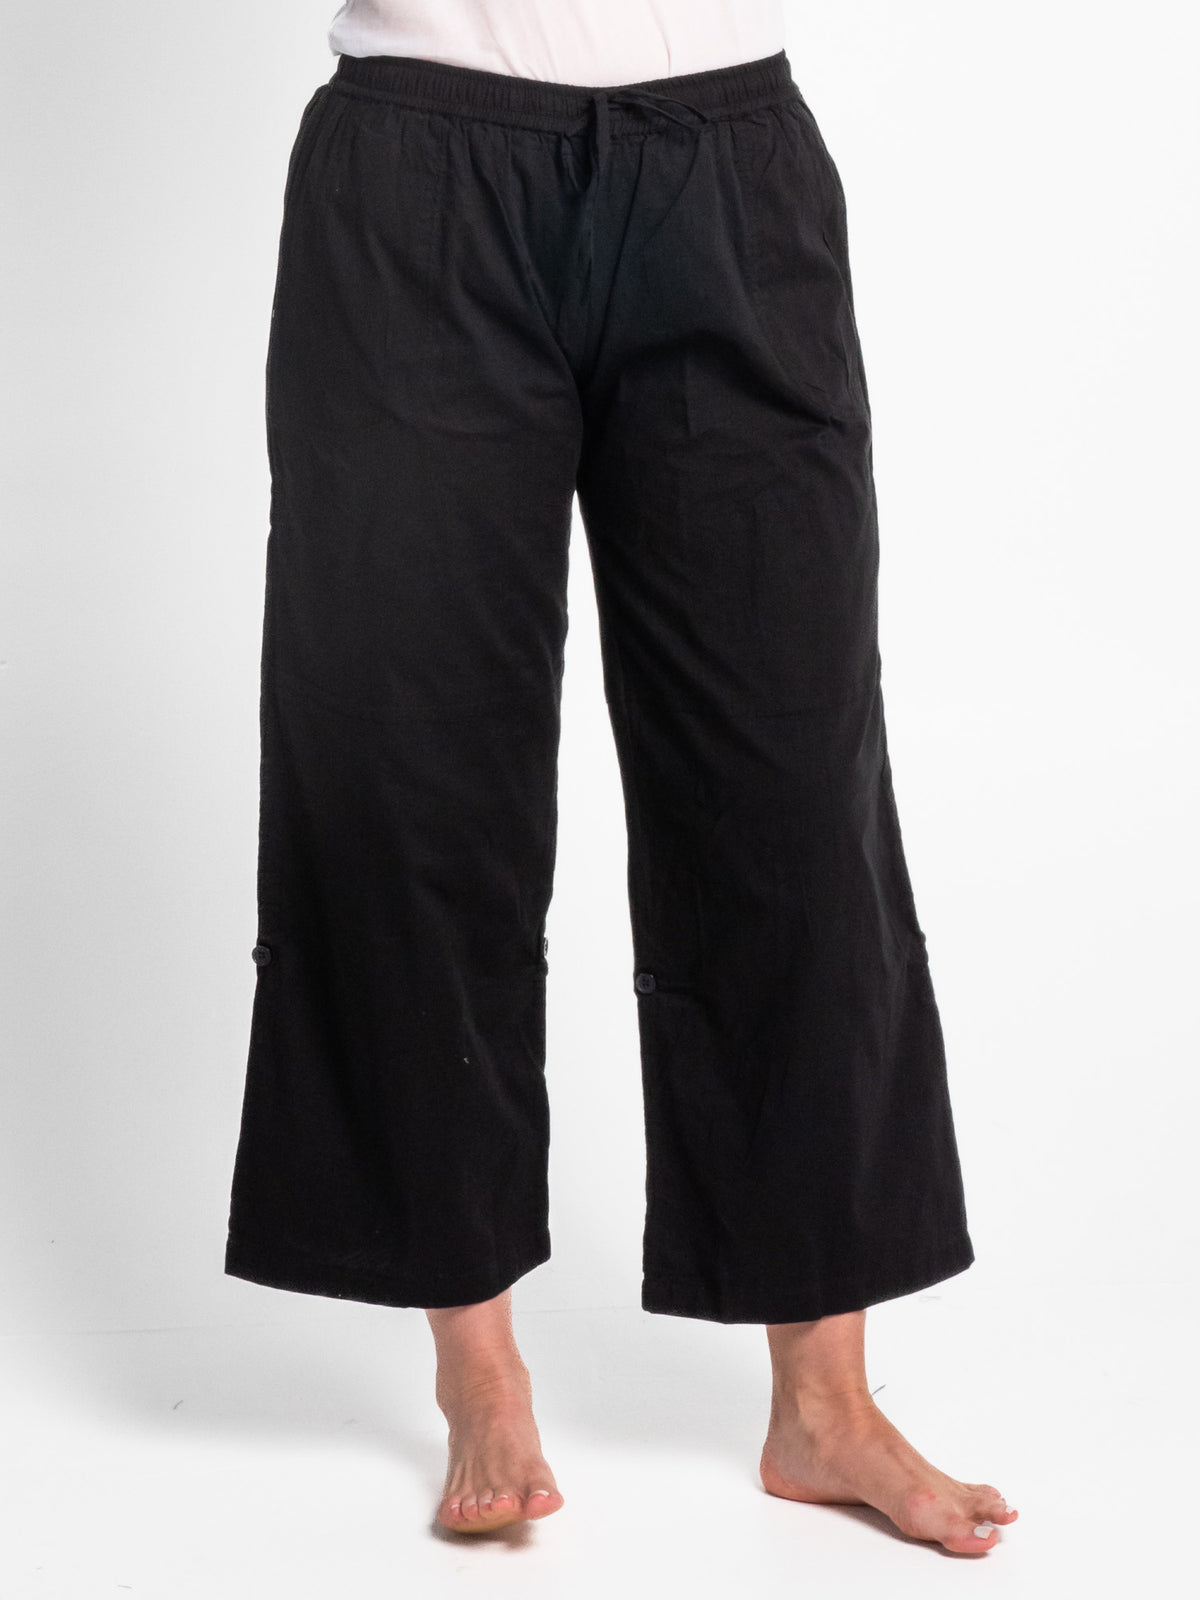 Sorrento Black Cotton Pants